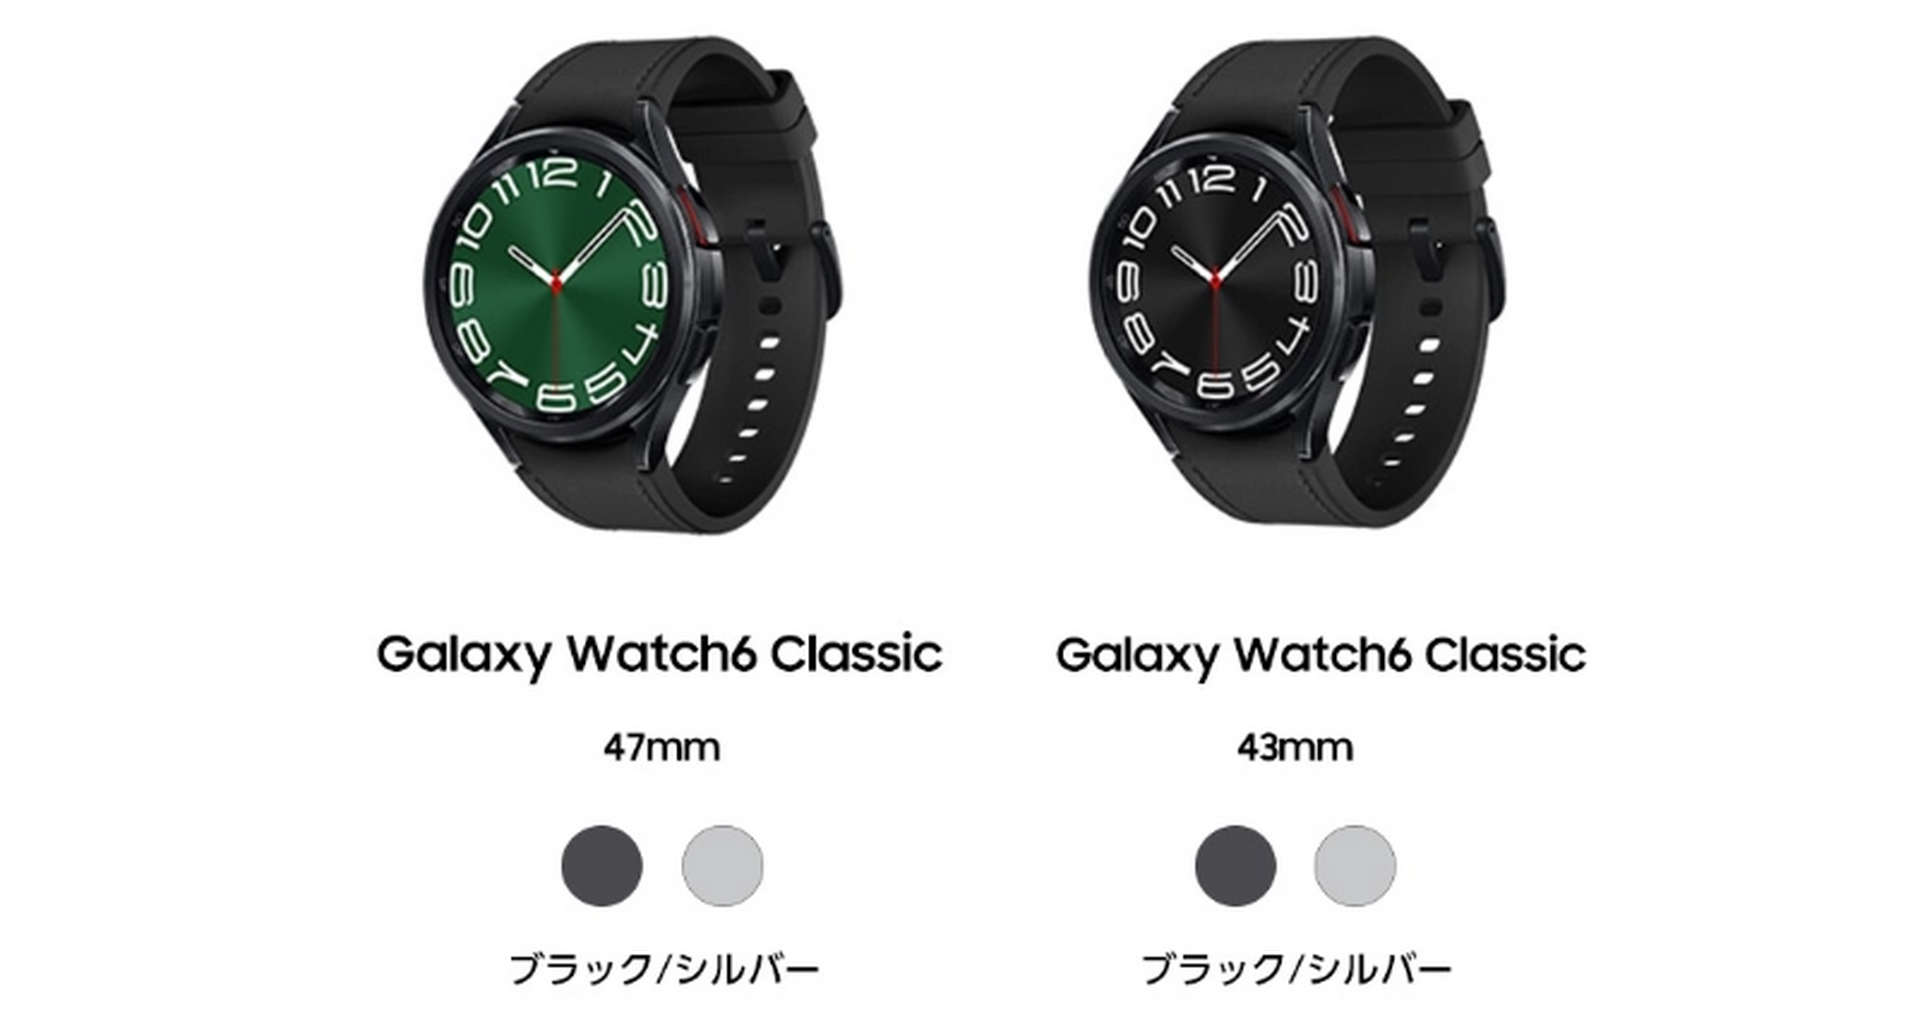 Galaxy Watch 6 Classicがau Online Shopで発売。ただしLTEは非対応